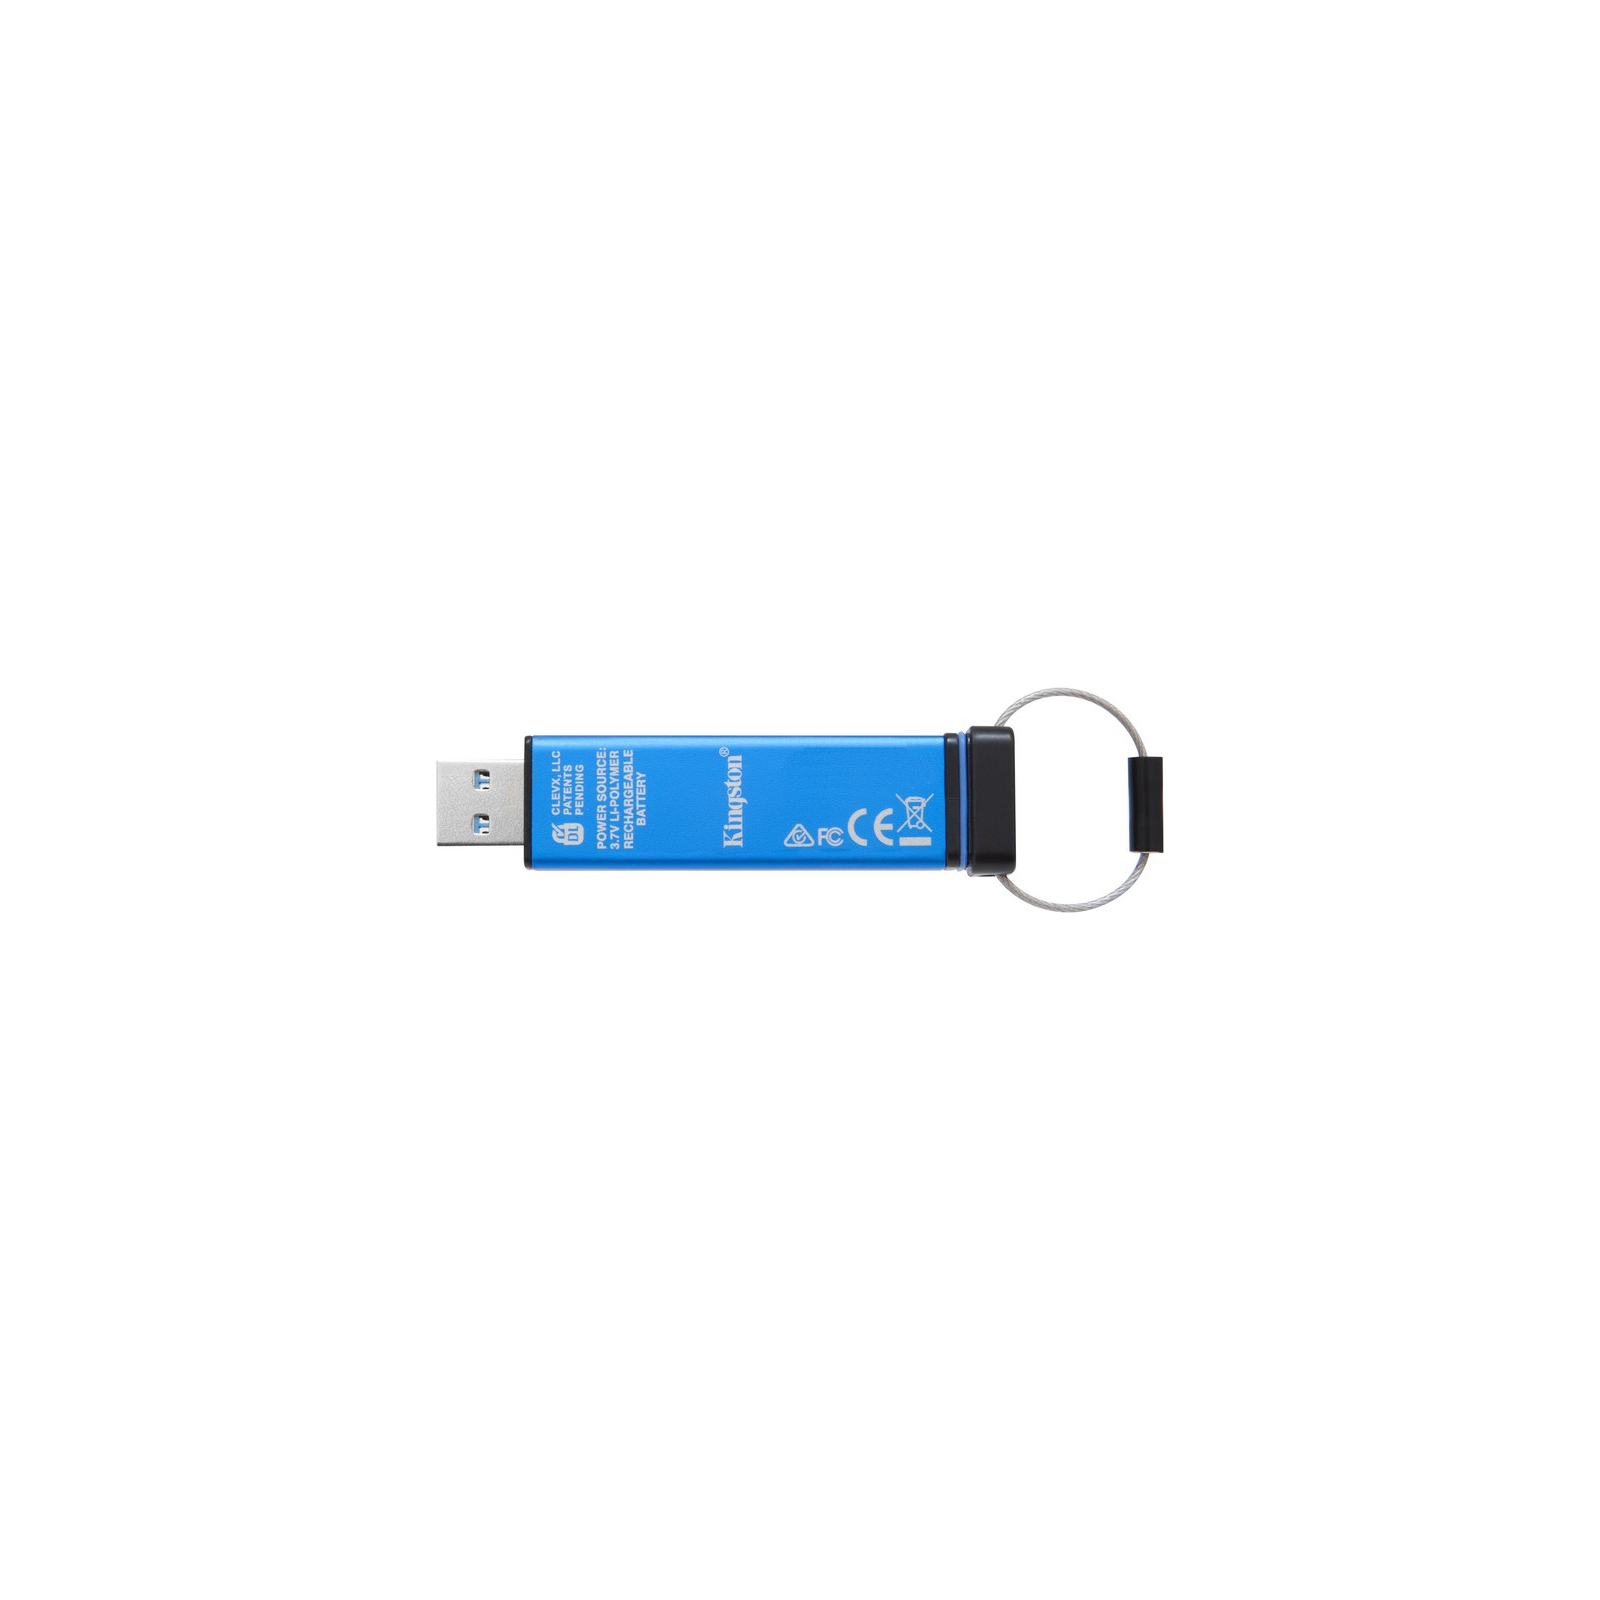 USB флеш накопитель Kingston 16GB DT 2000 Metal Security USB 3.0 (DT2000/16GB) изображение 3